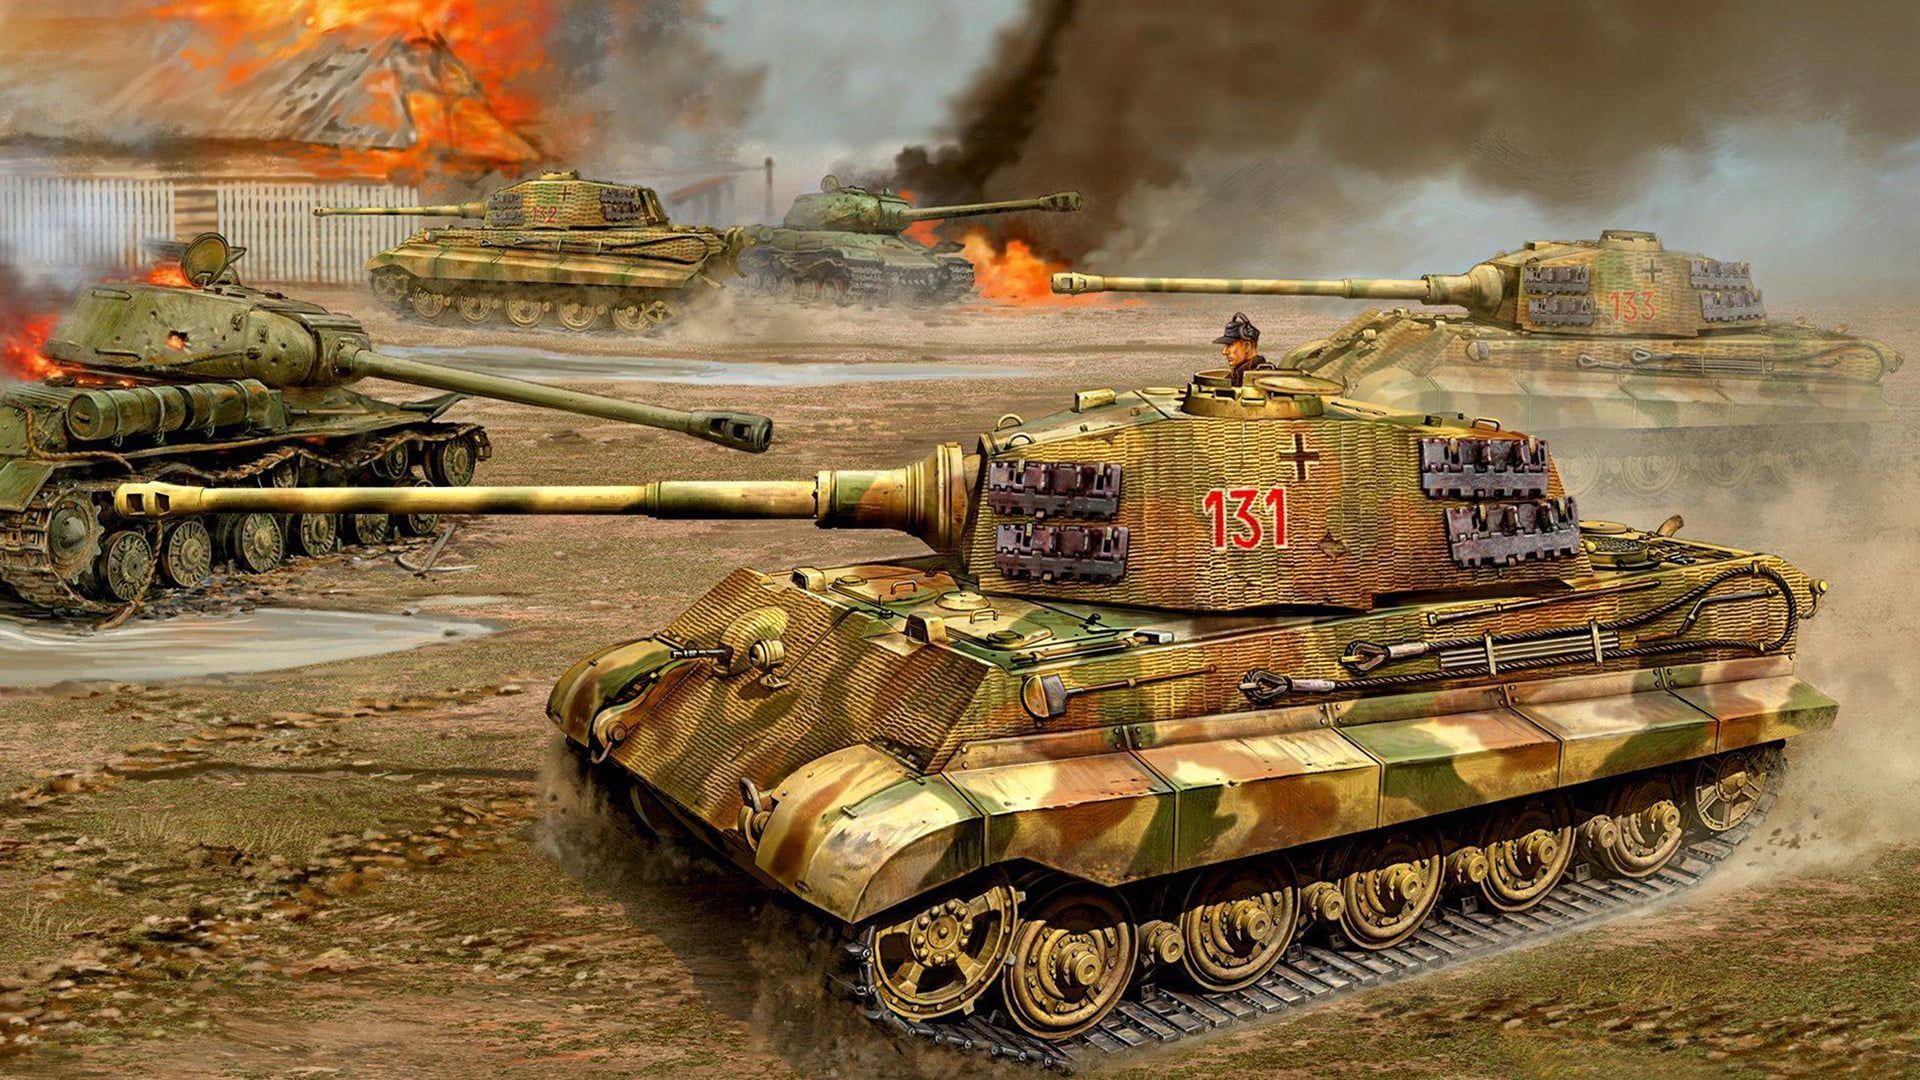 Tank Wars Game Digital Wallpaper #war #figure #battle Tiger II King Tiger The Is 2 Tiger II Heavy Tank King Tiger Is 2. Royal Tiger F. Военный, Военный танк, Танк